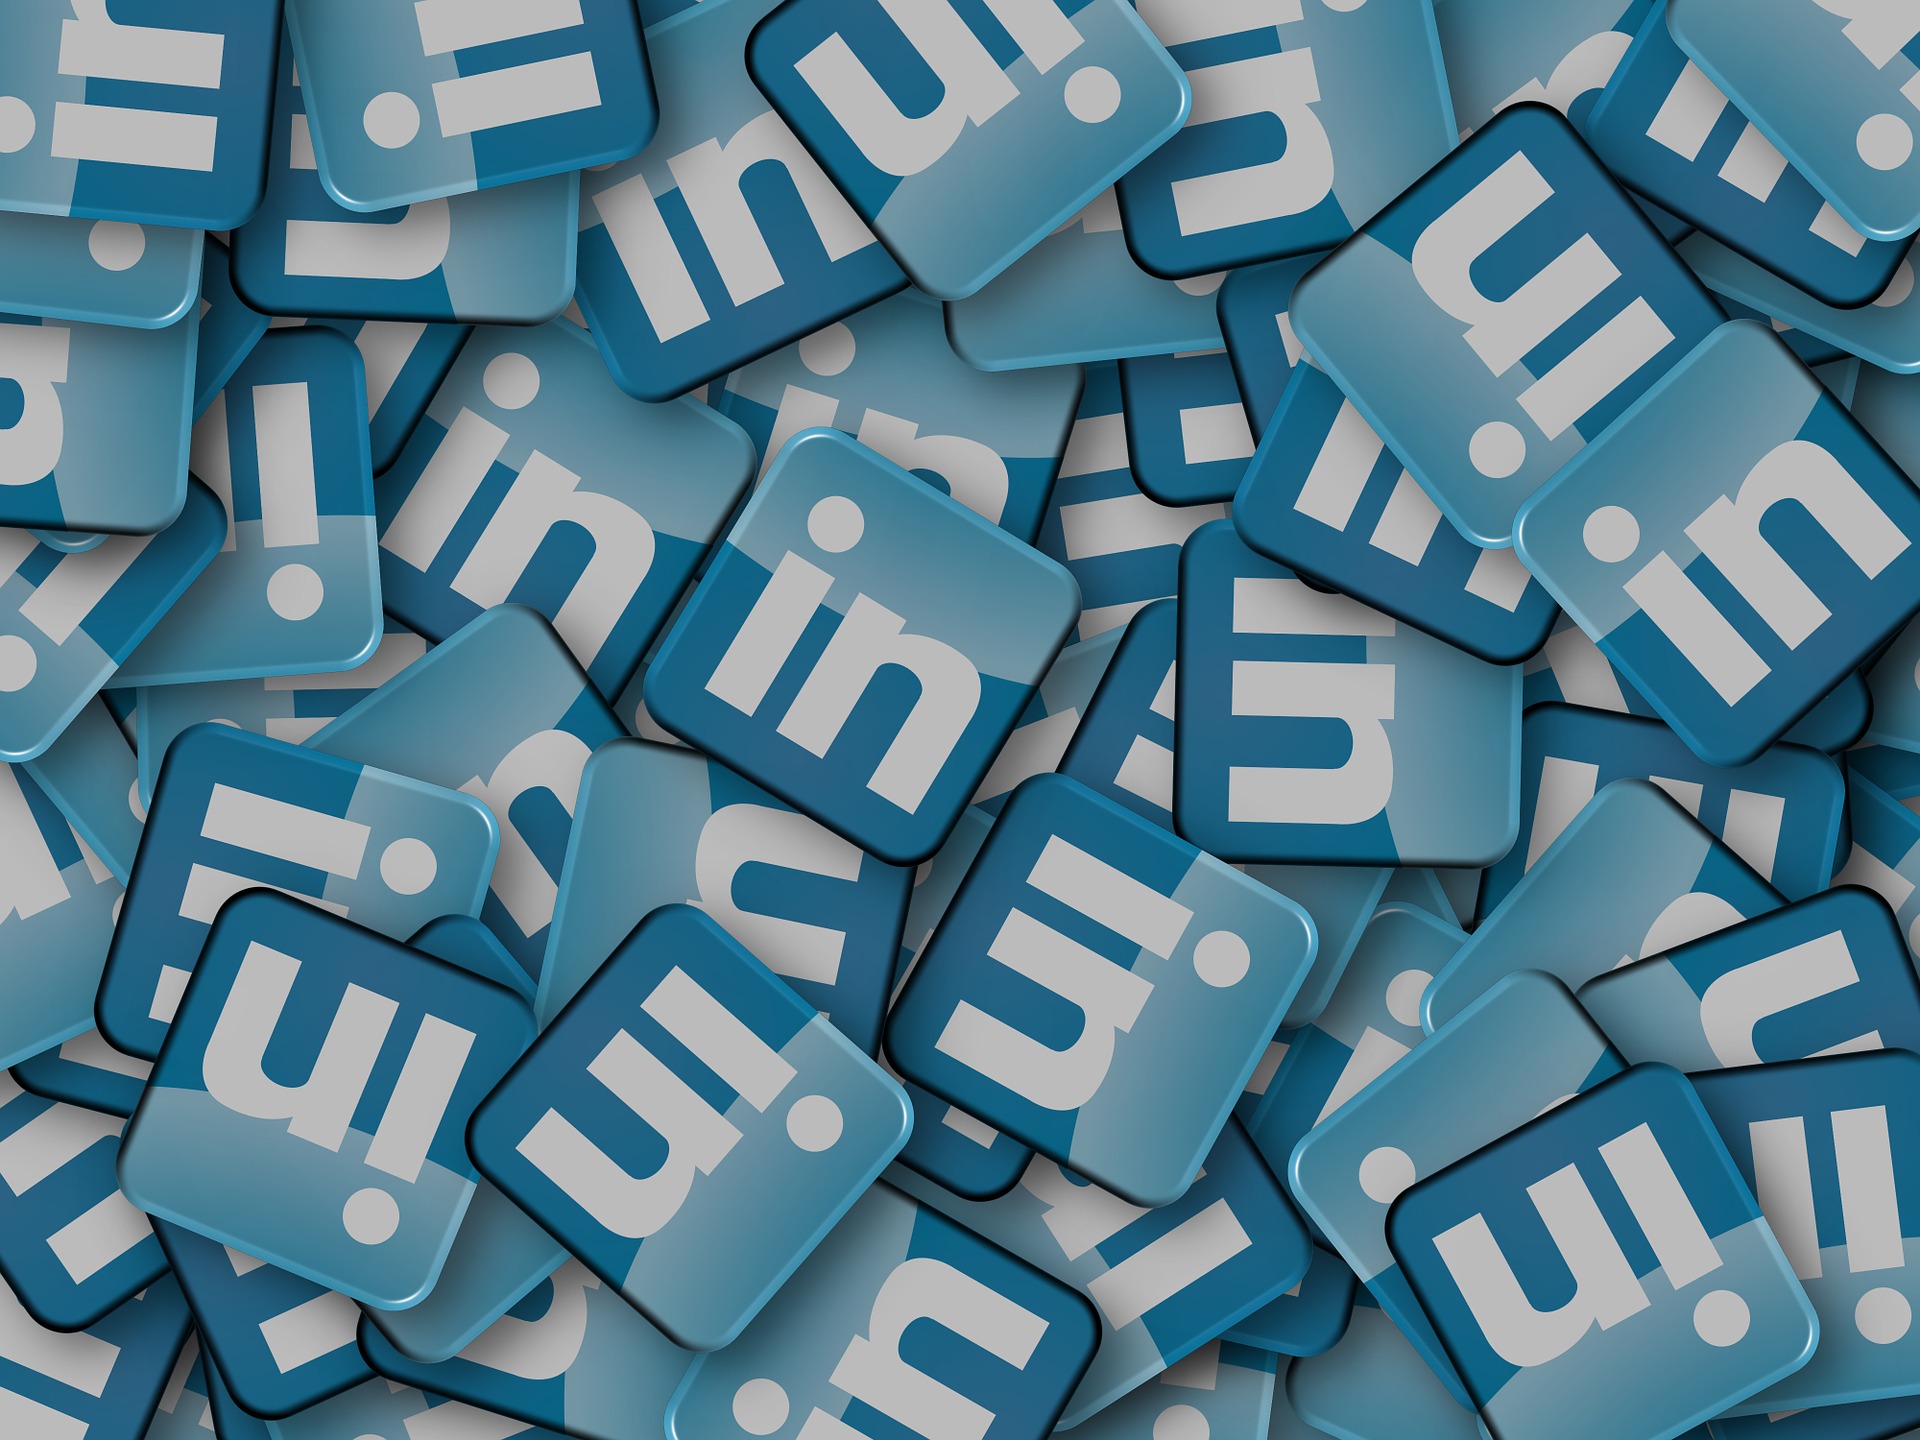 Blue LinkedIn logo tiles piled on top of each other